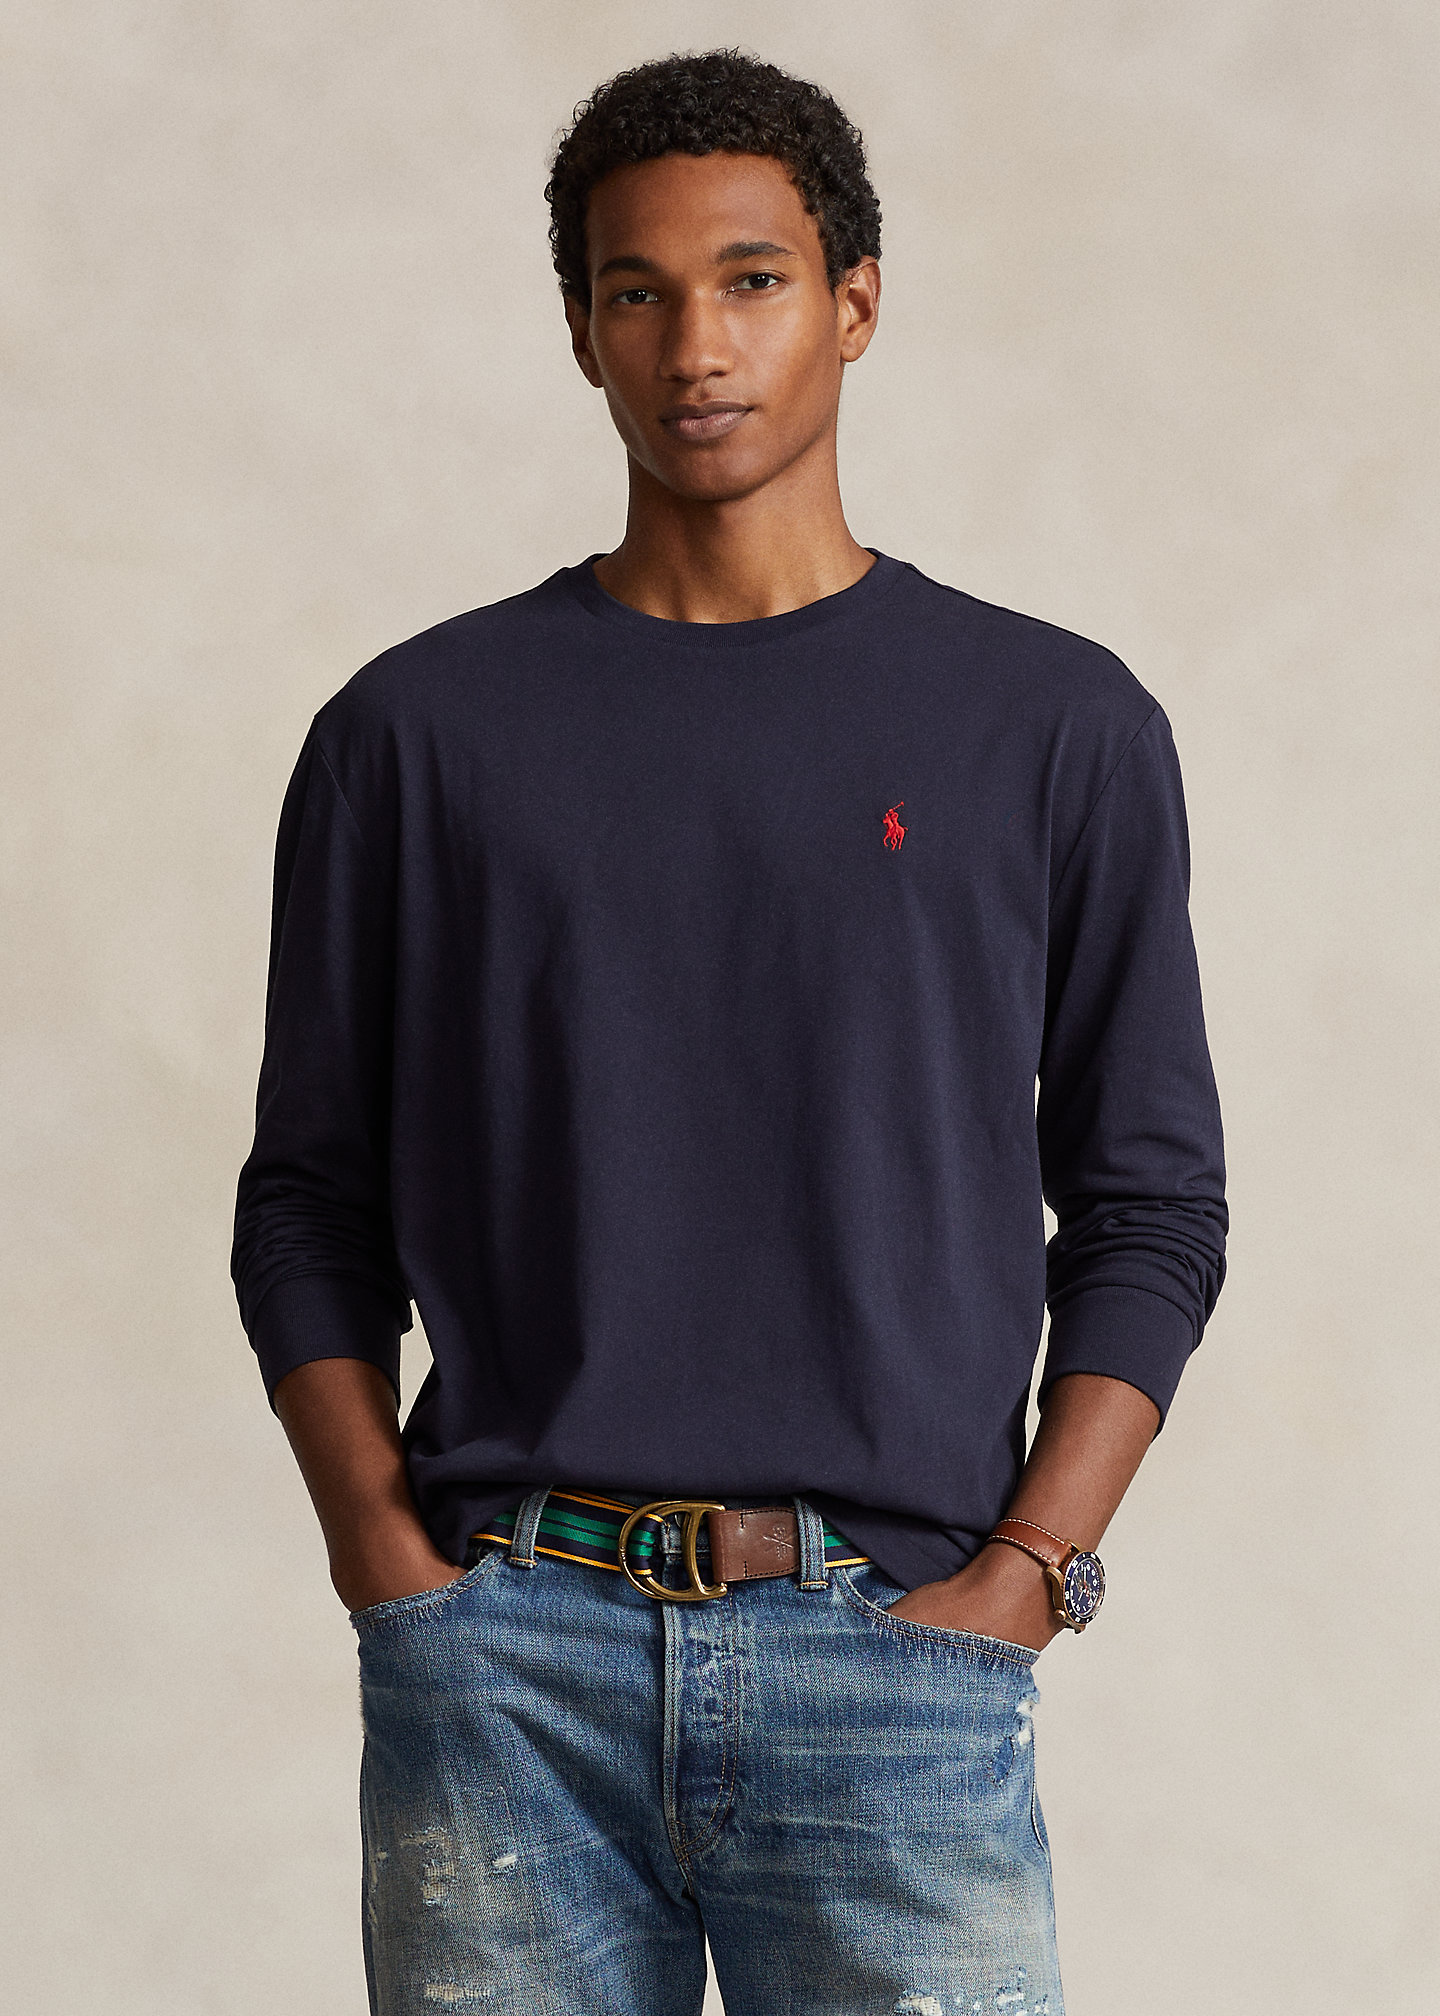 Jersey Long-Sleeve T-Shirt - All Fits